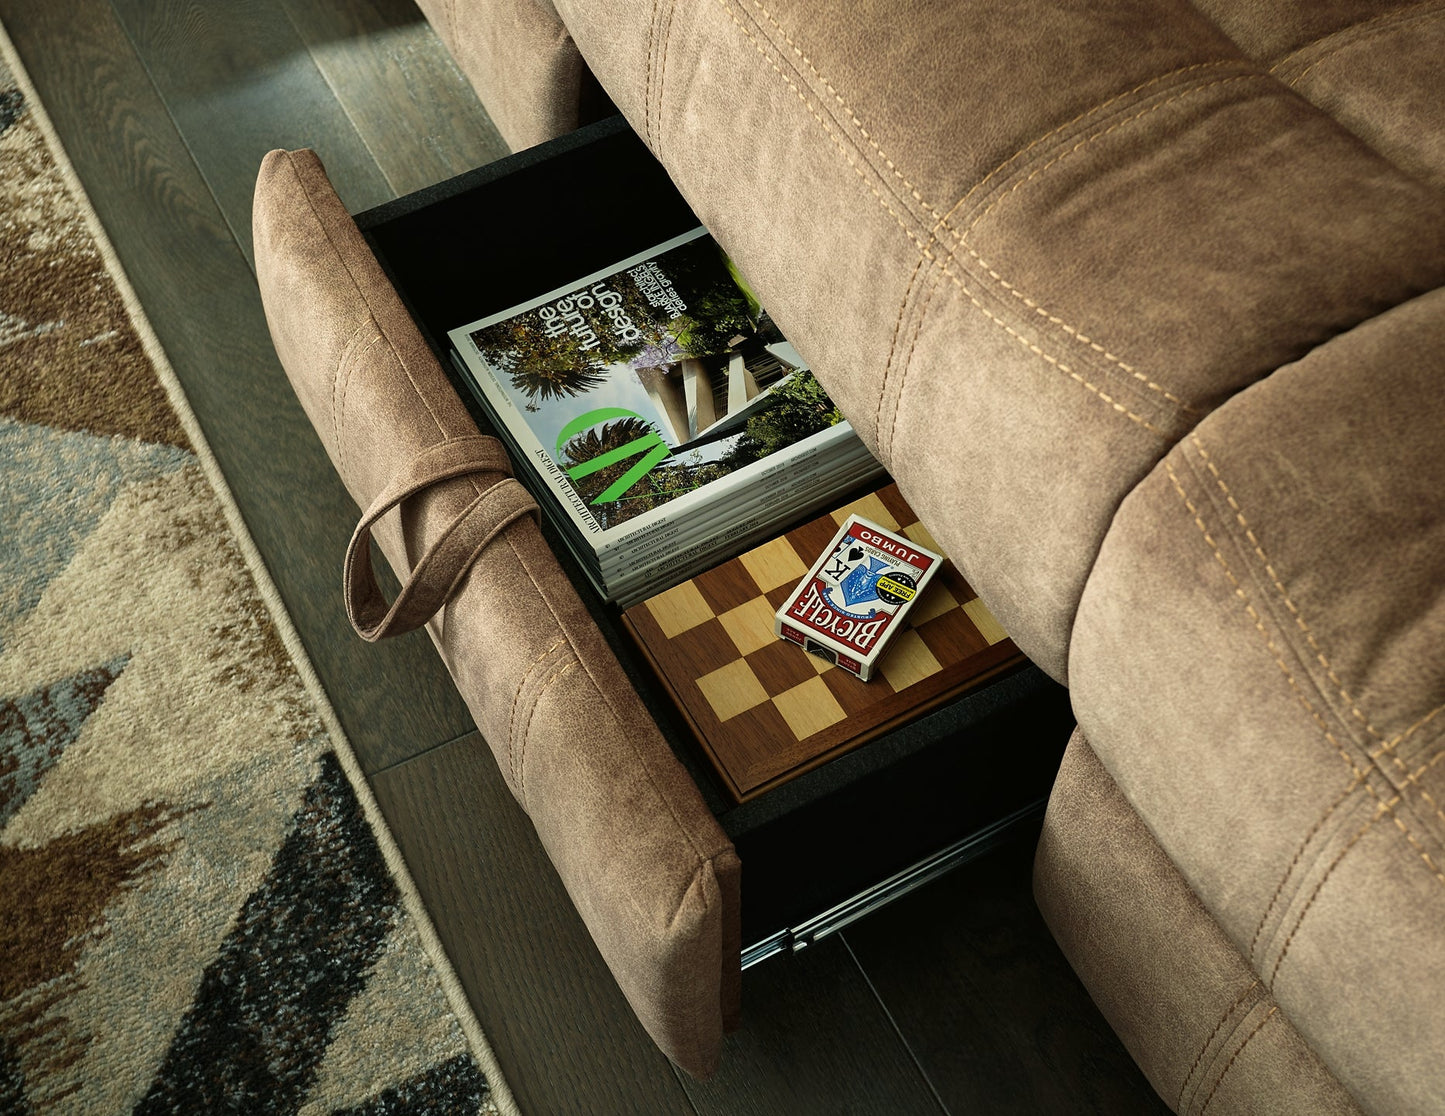 Huddle-Up Sofa and Loveseat at Cloud 9 Mattress & Furniture furniture, home furnishing, home decor